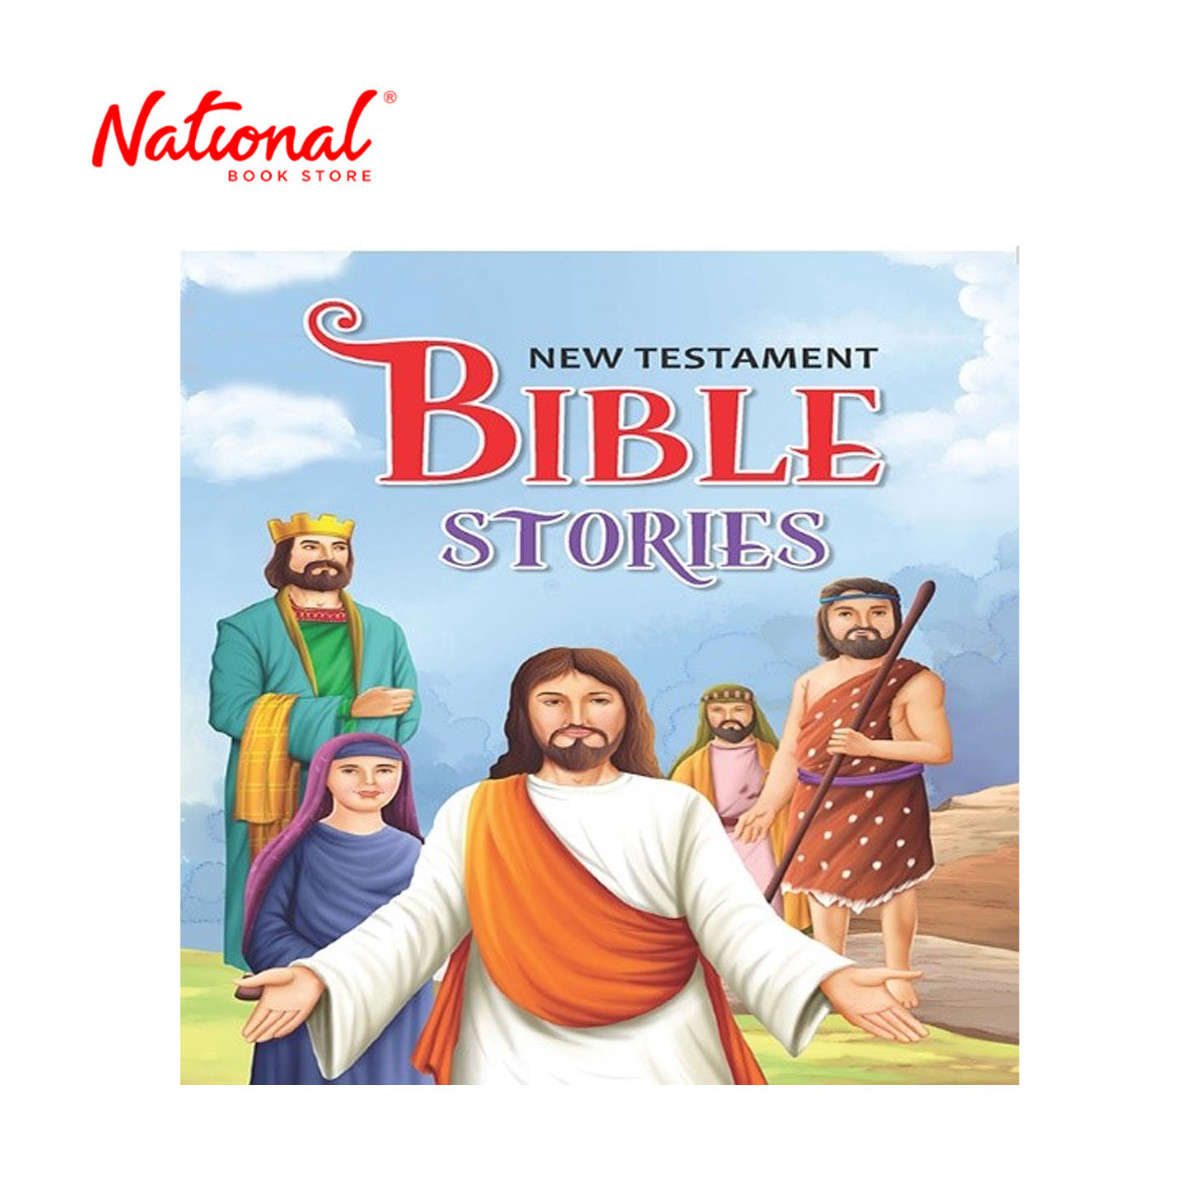 New Testament Bible Stories By Doreen De Castro - Hardcover - Bible Stories for Kids